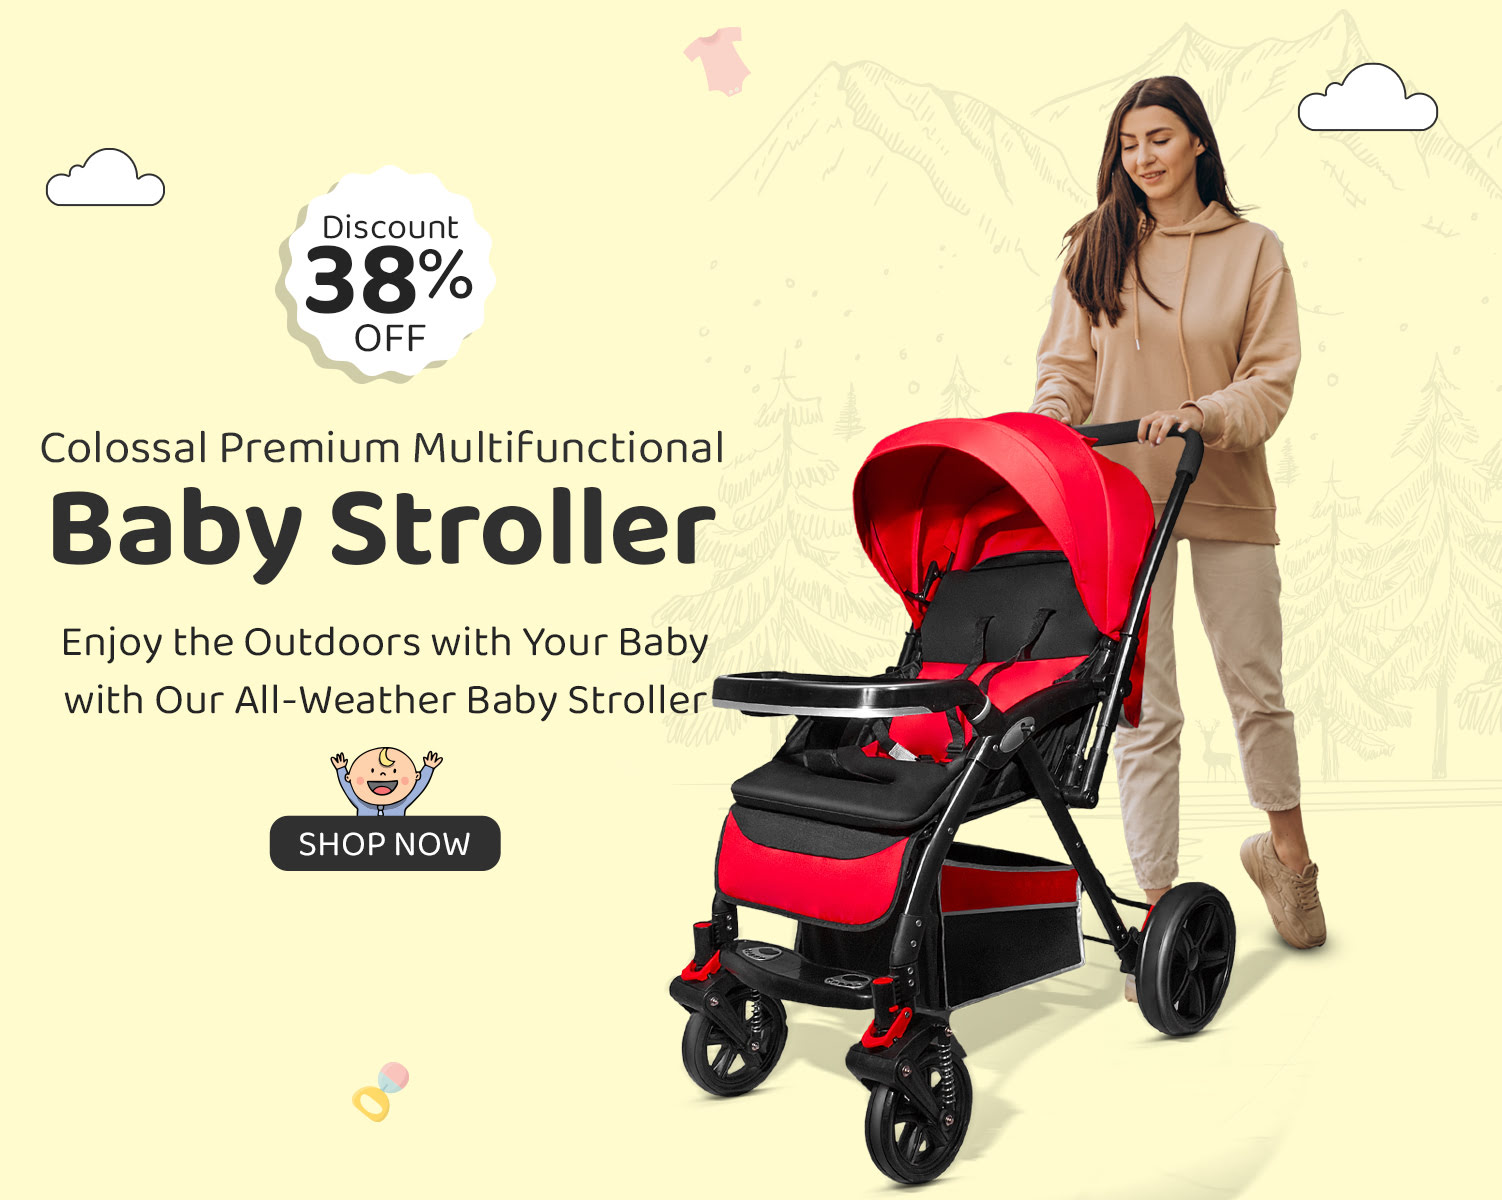 luxe-baby-stroller-multi-functional-baby-stroller